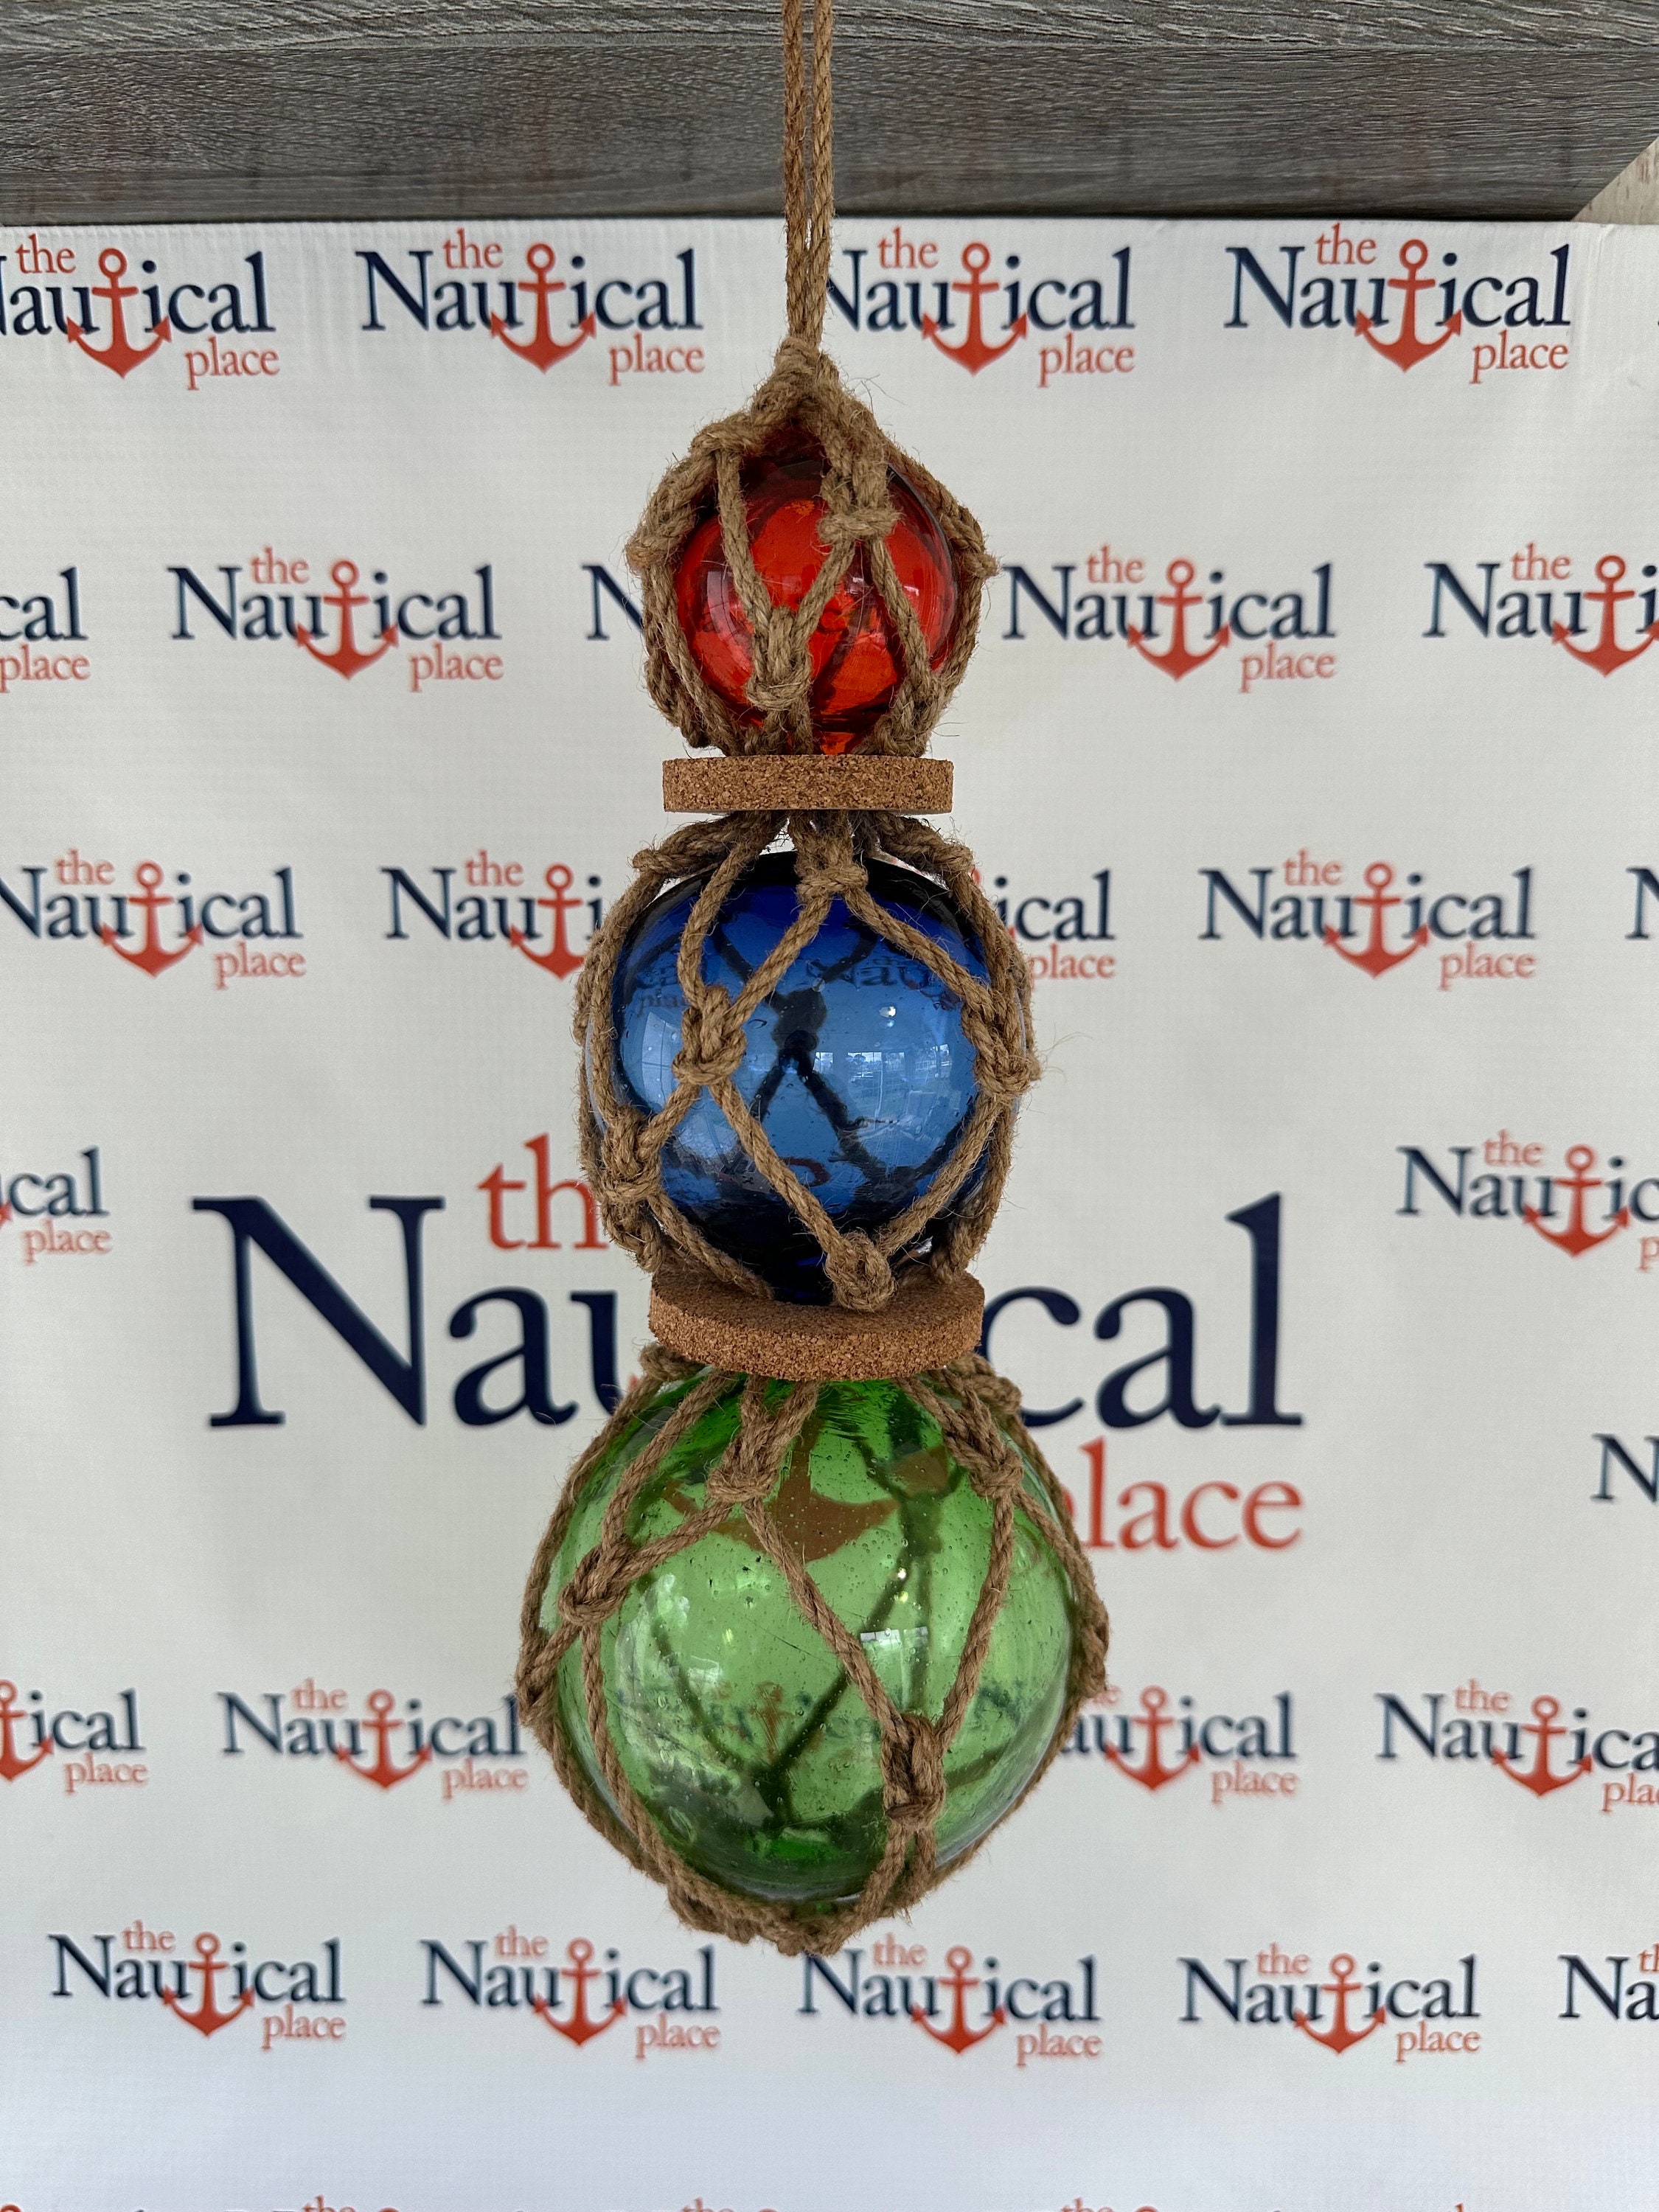 3 Glass Fishing Floats On Rope - Fish Net Buoy Ball - Nautical Beach Decor  - Blue, Green, Red w/ Rope Netting & Cork